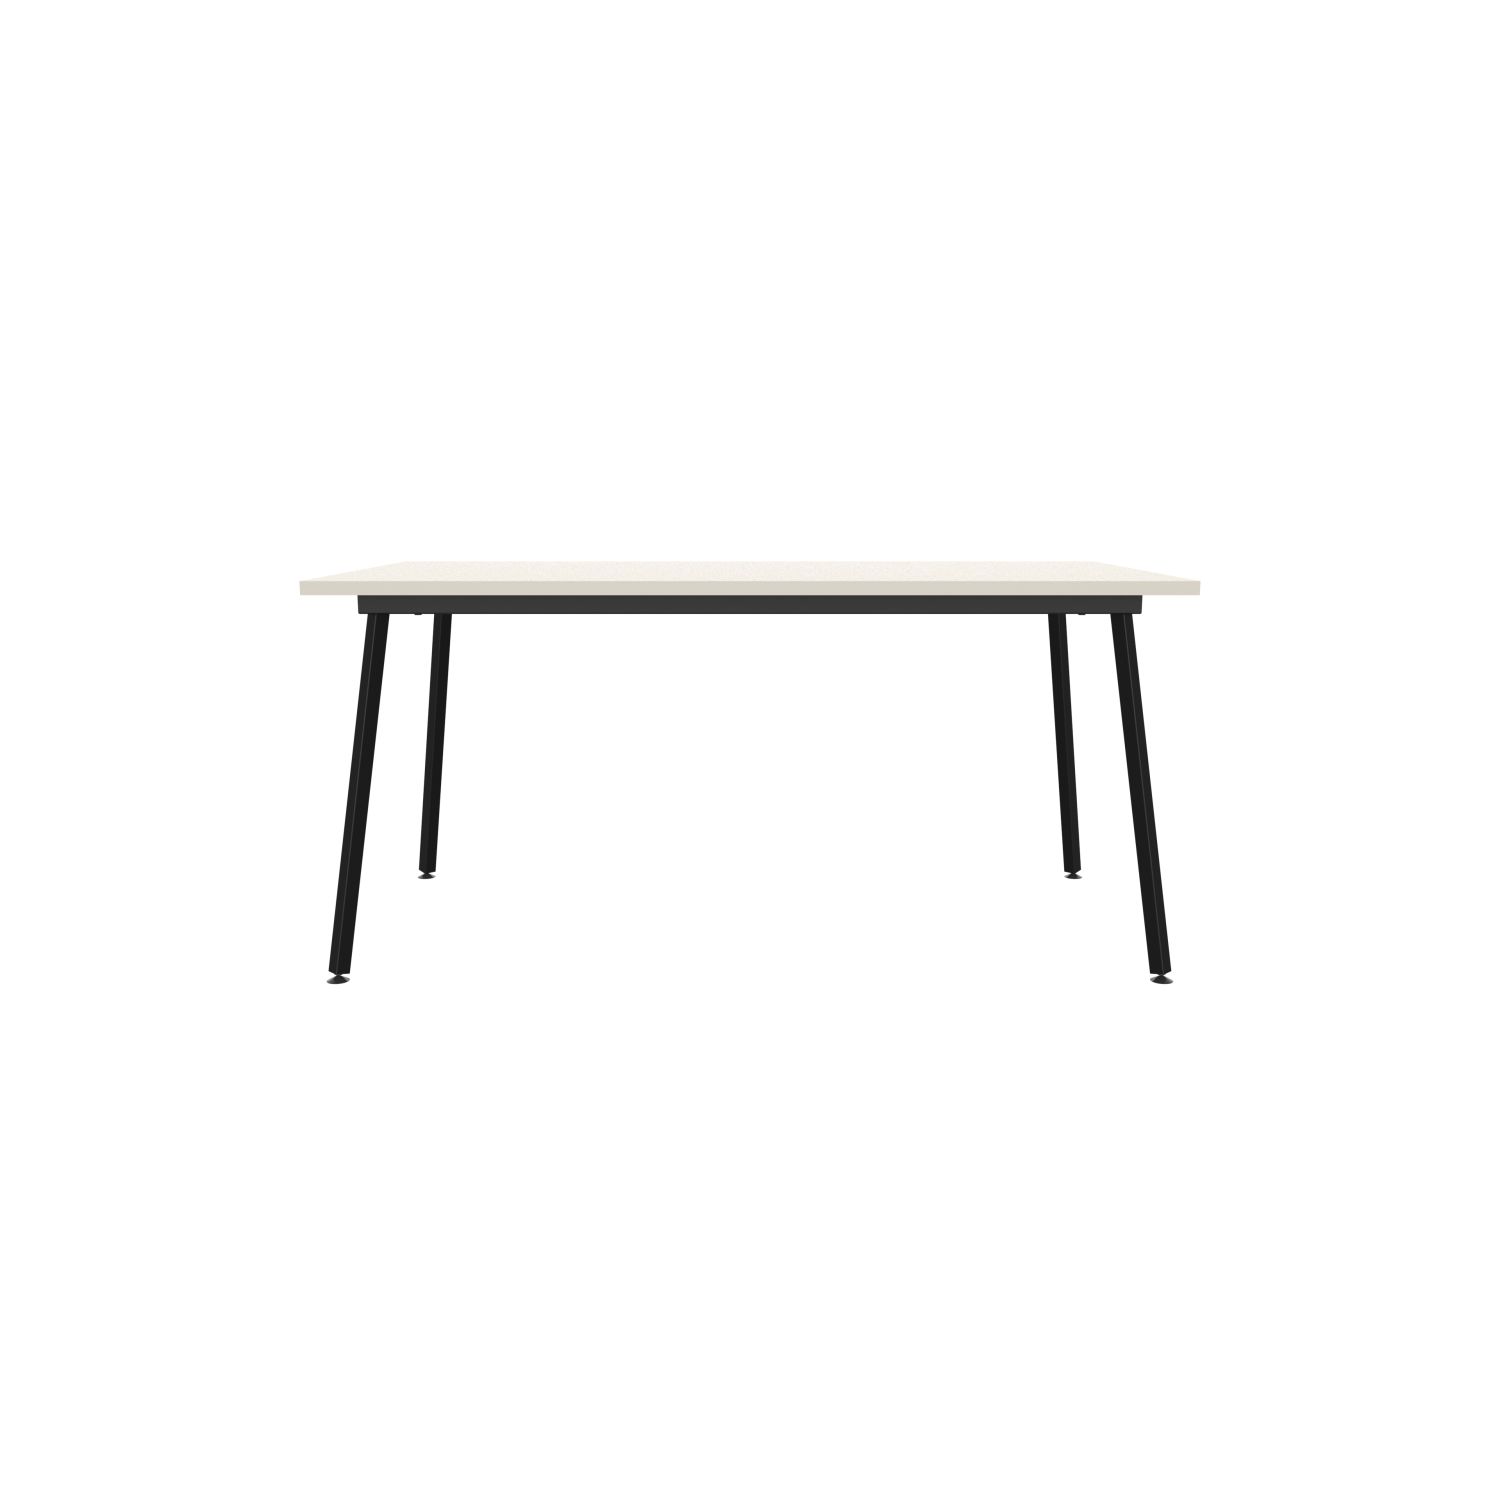 lensvelt maarten baas table fixed height 80x160 table top 26 mm top melamine boring grey edge abs boring grey black frame ral9005